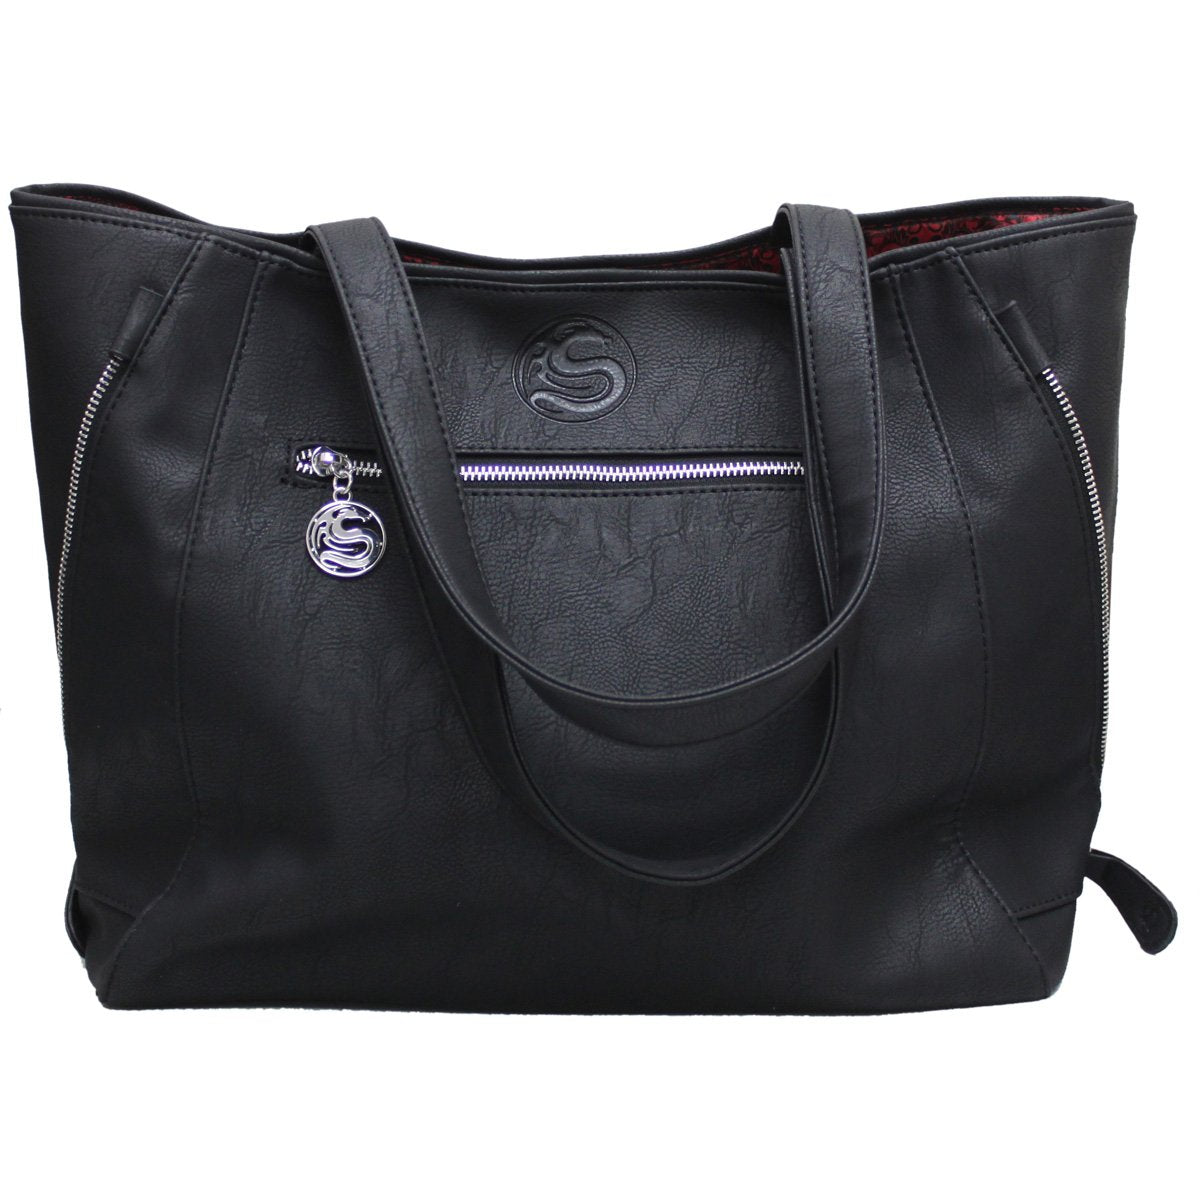 gothic black cats handbag for women